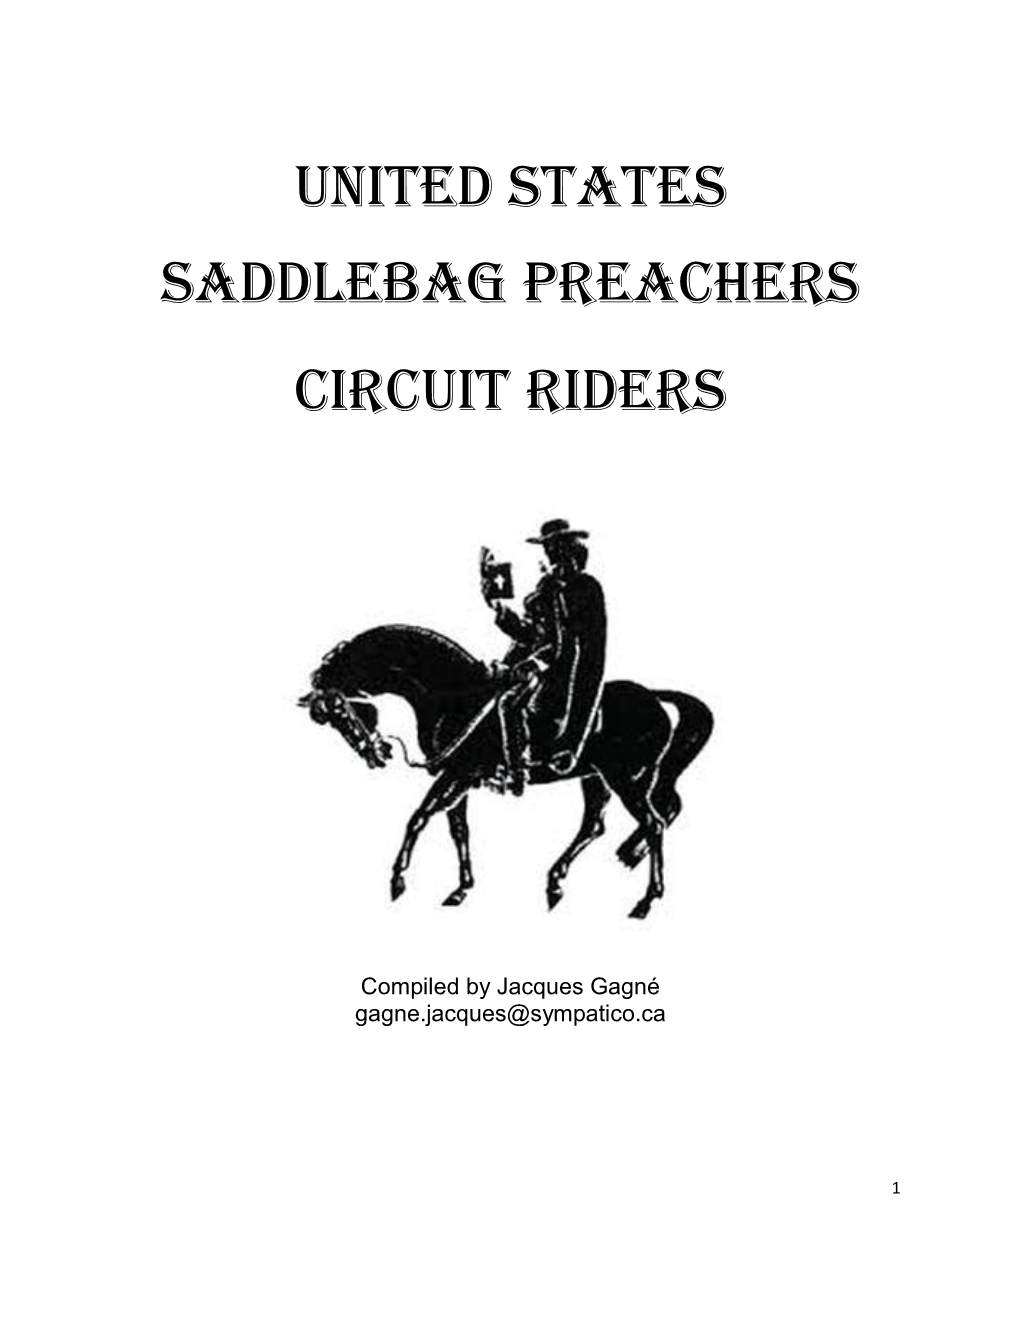 United States Saddlebag Preachers Circuit Riders